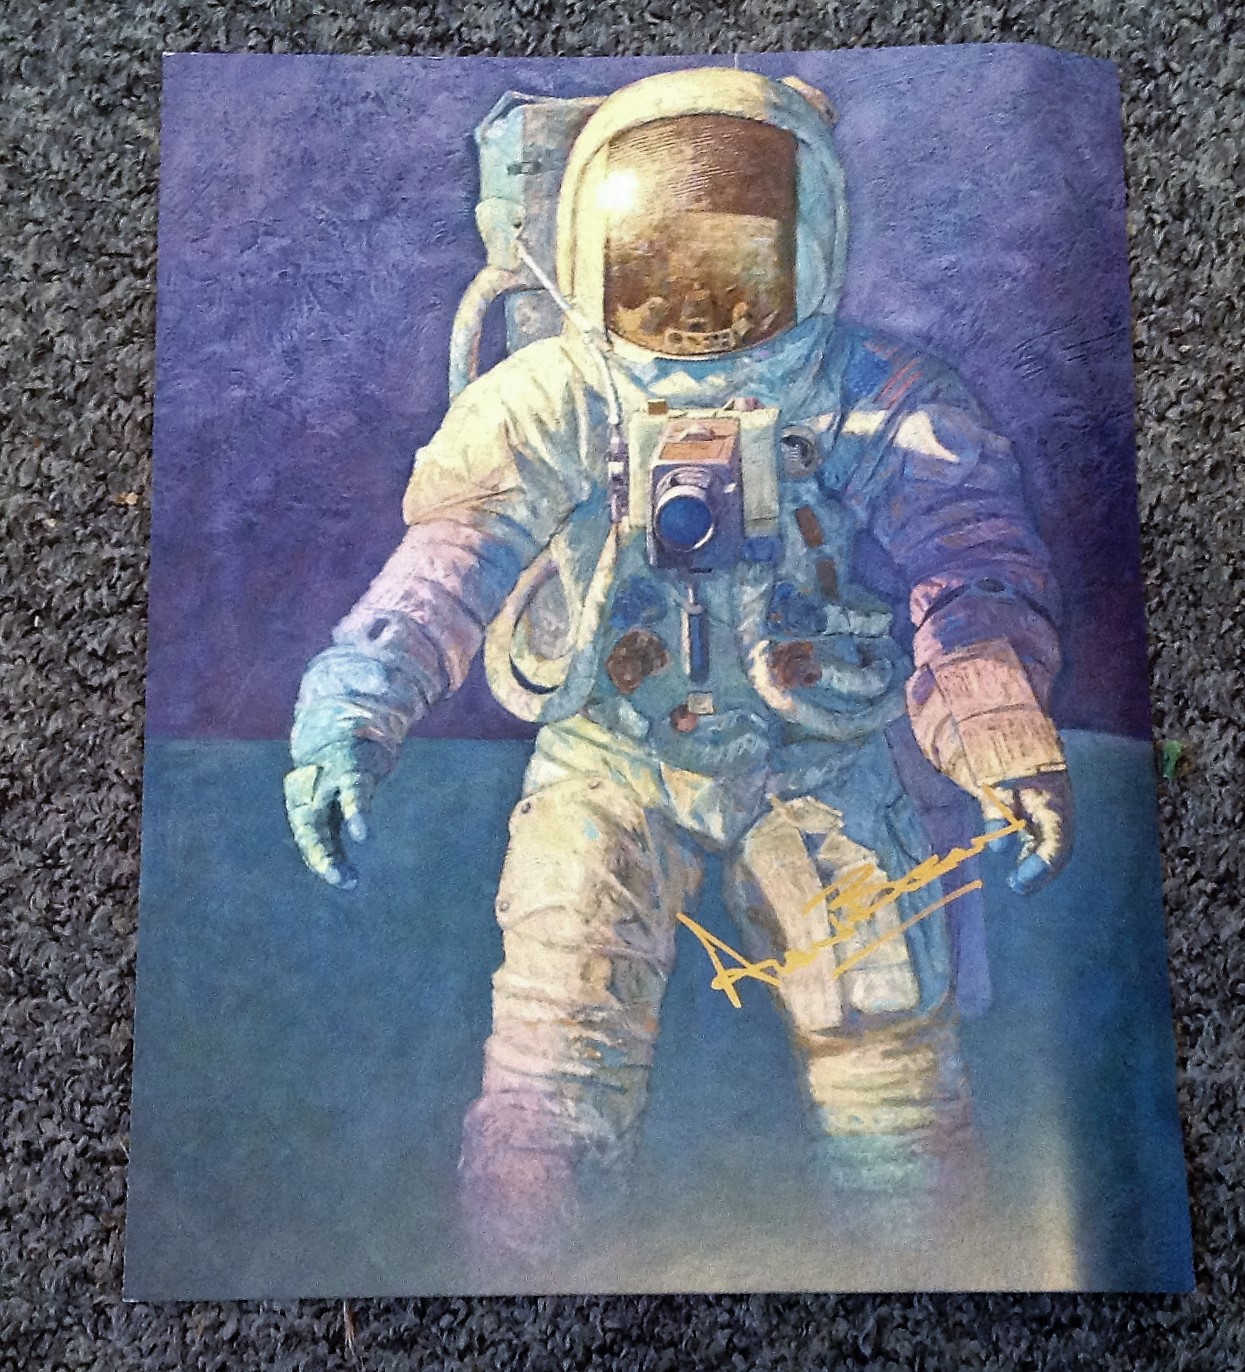 Alan Bean signed 13x10 Moon Walk print by Astronaut/Explorer/ Moonwalker Alan Bean. Alan LaVern Bean